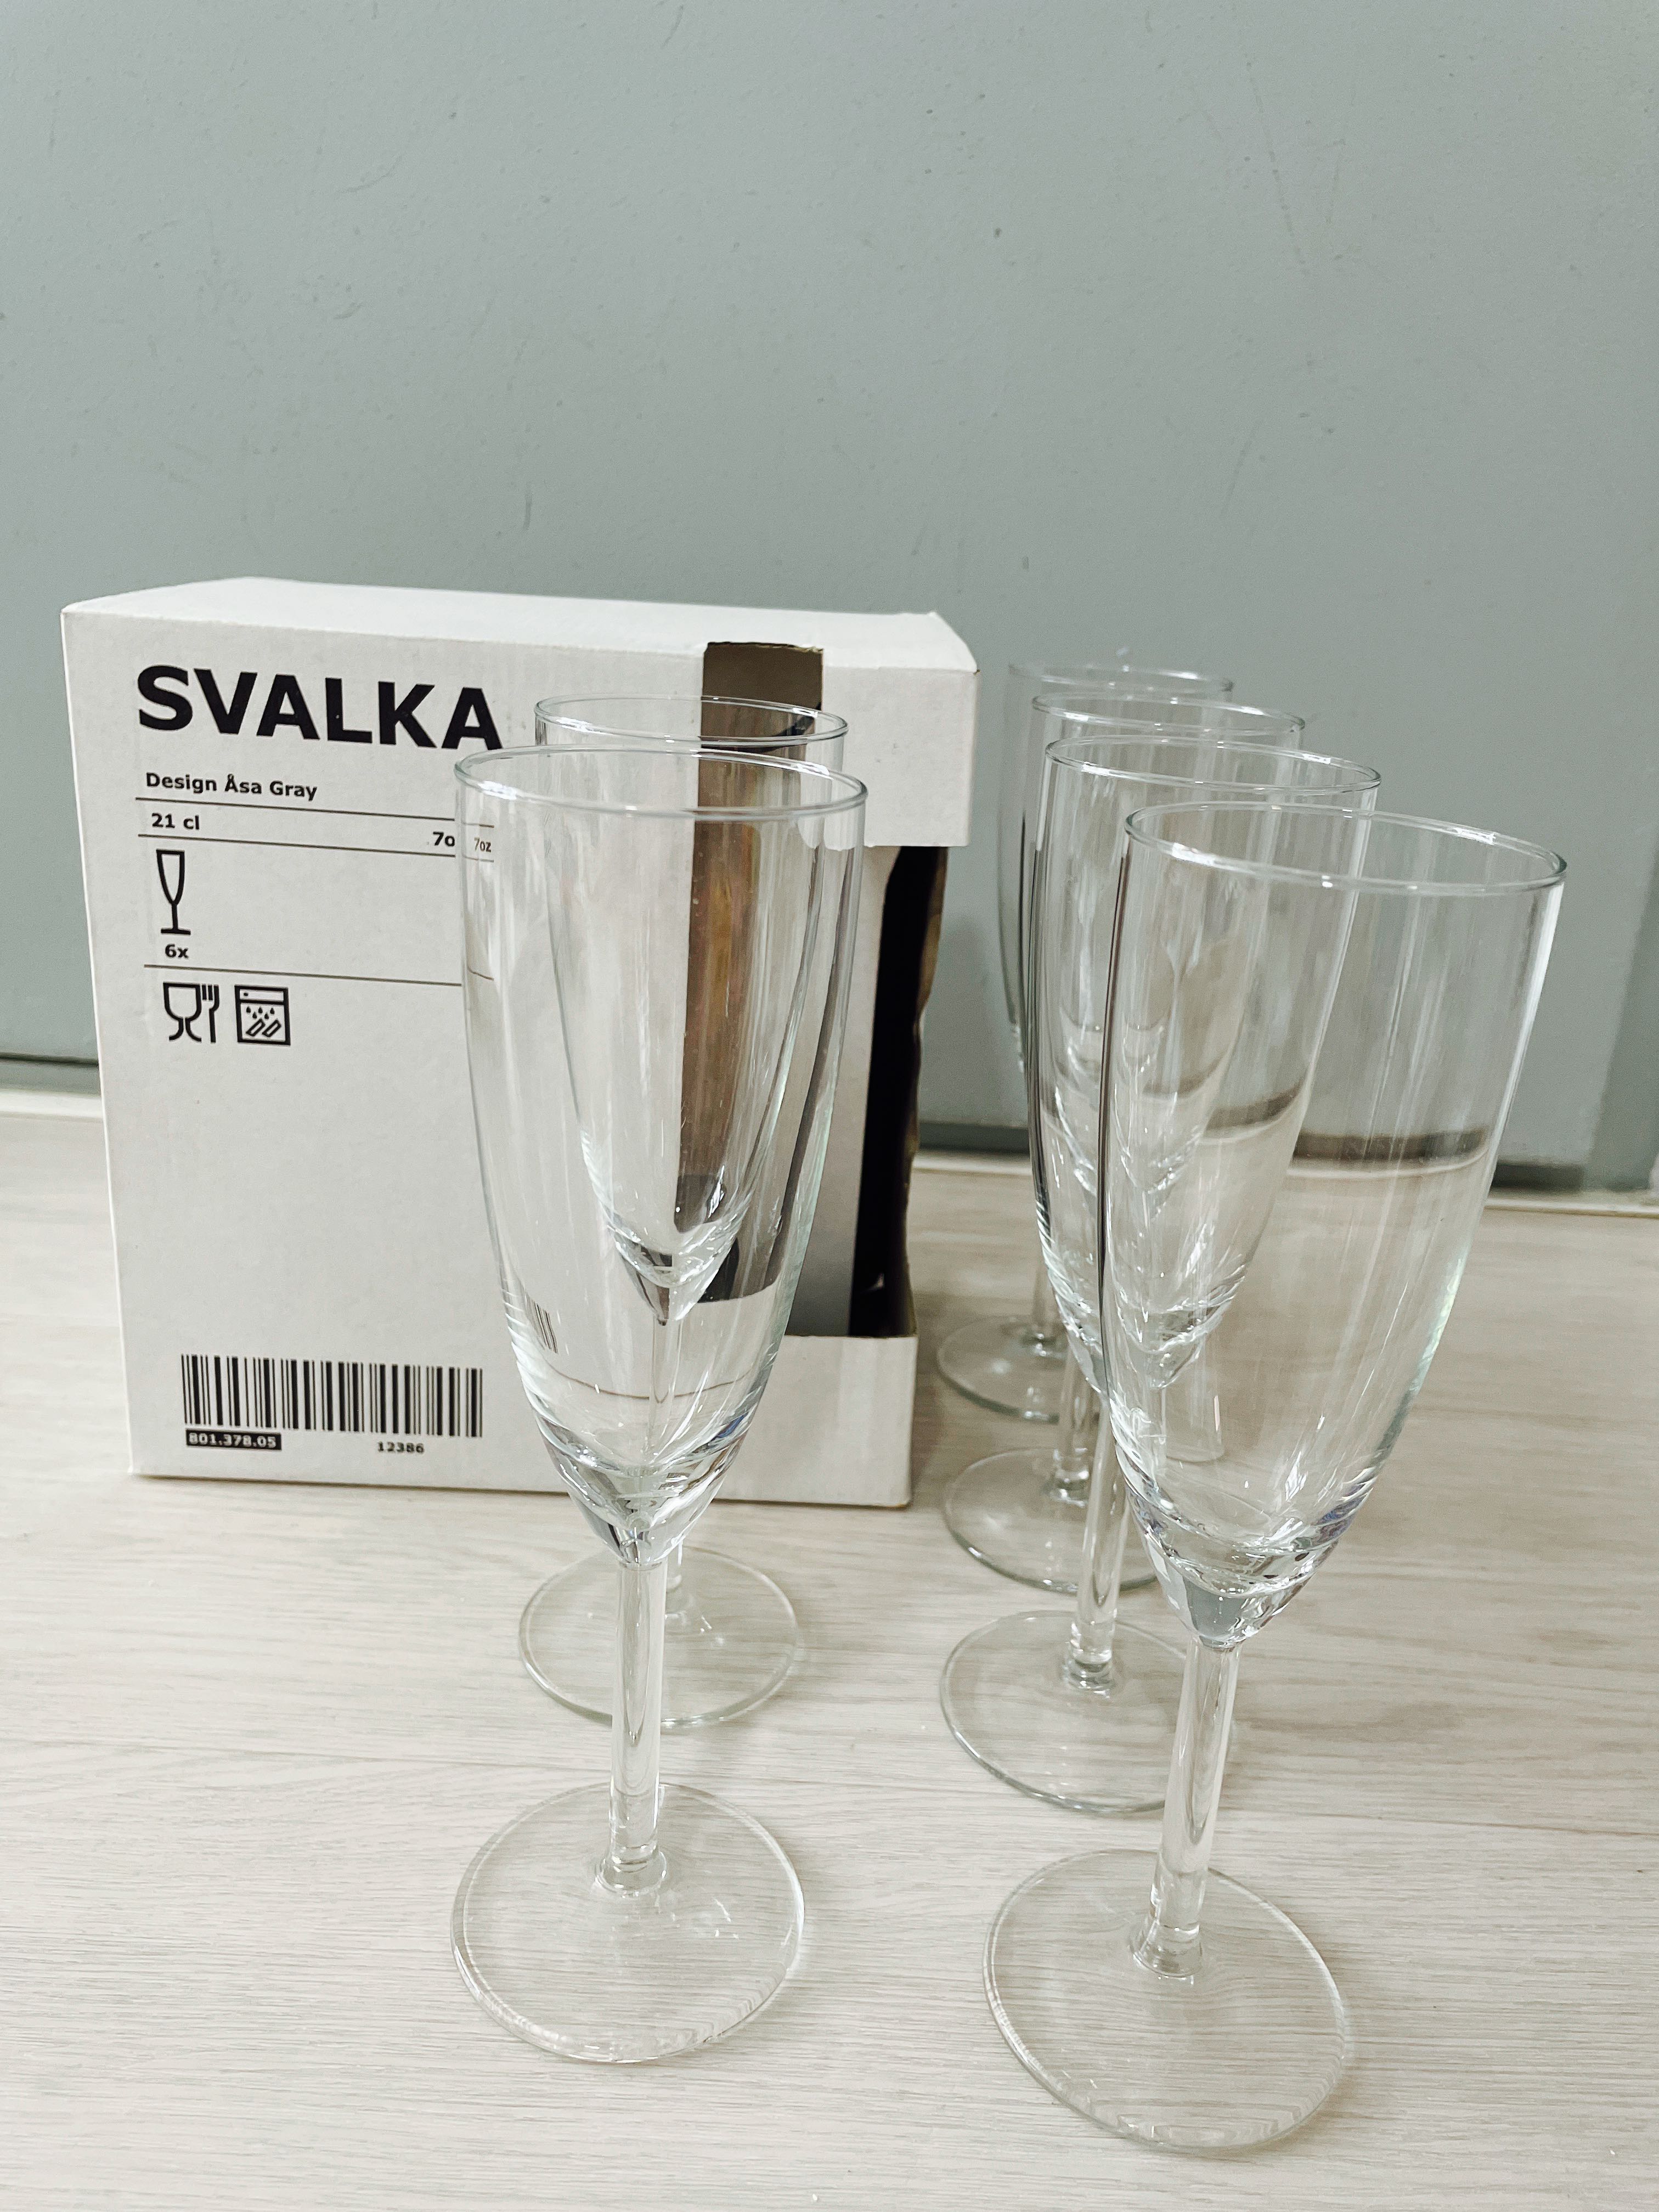 https://media.karousell.com/media/photos/products/2021/9/8/ikea_svalka_champagne_glasses_1631078321_f110d1ce.jpg